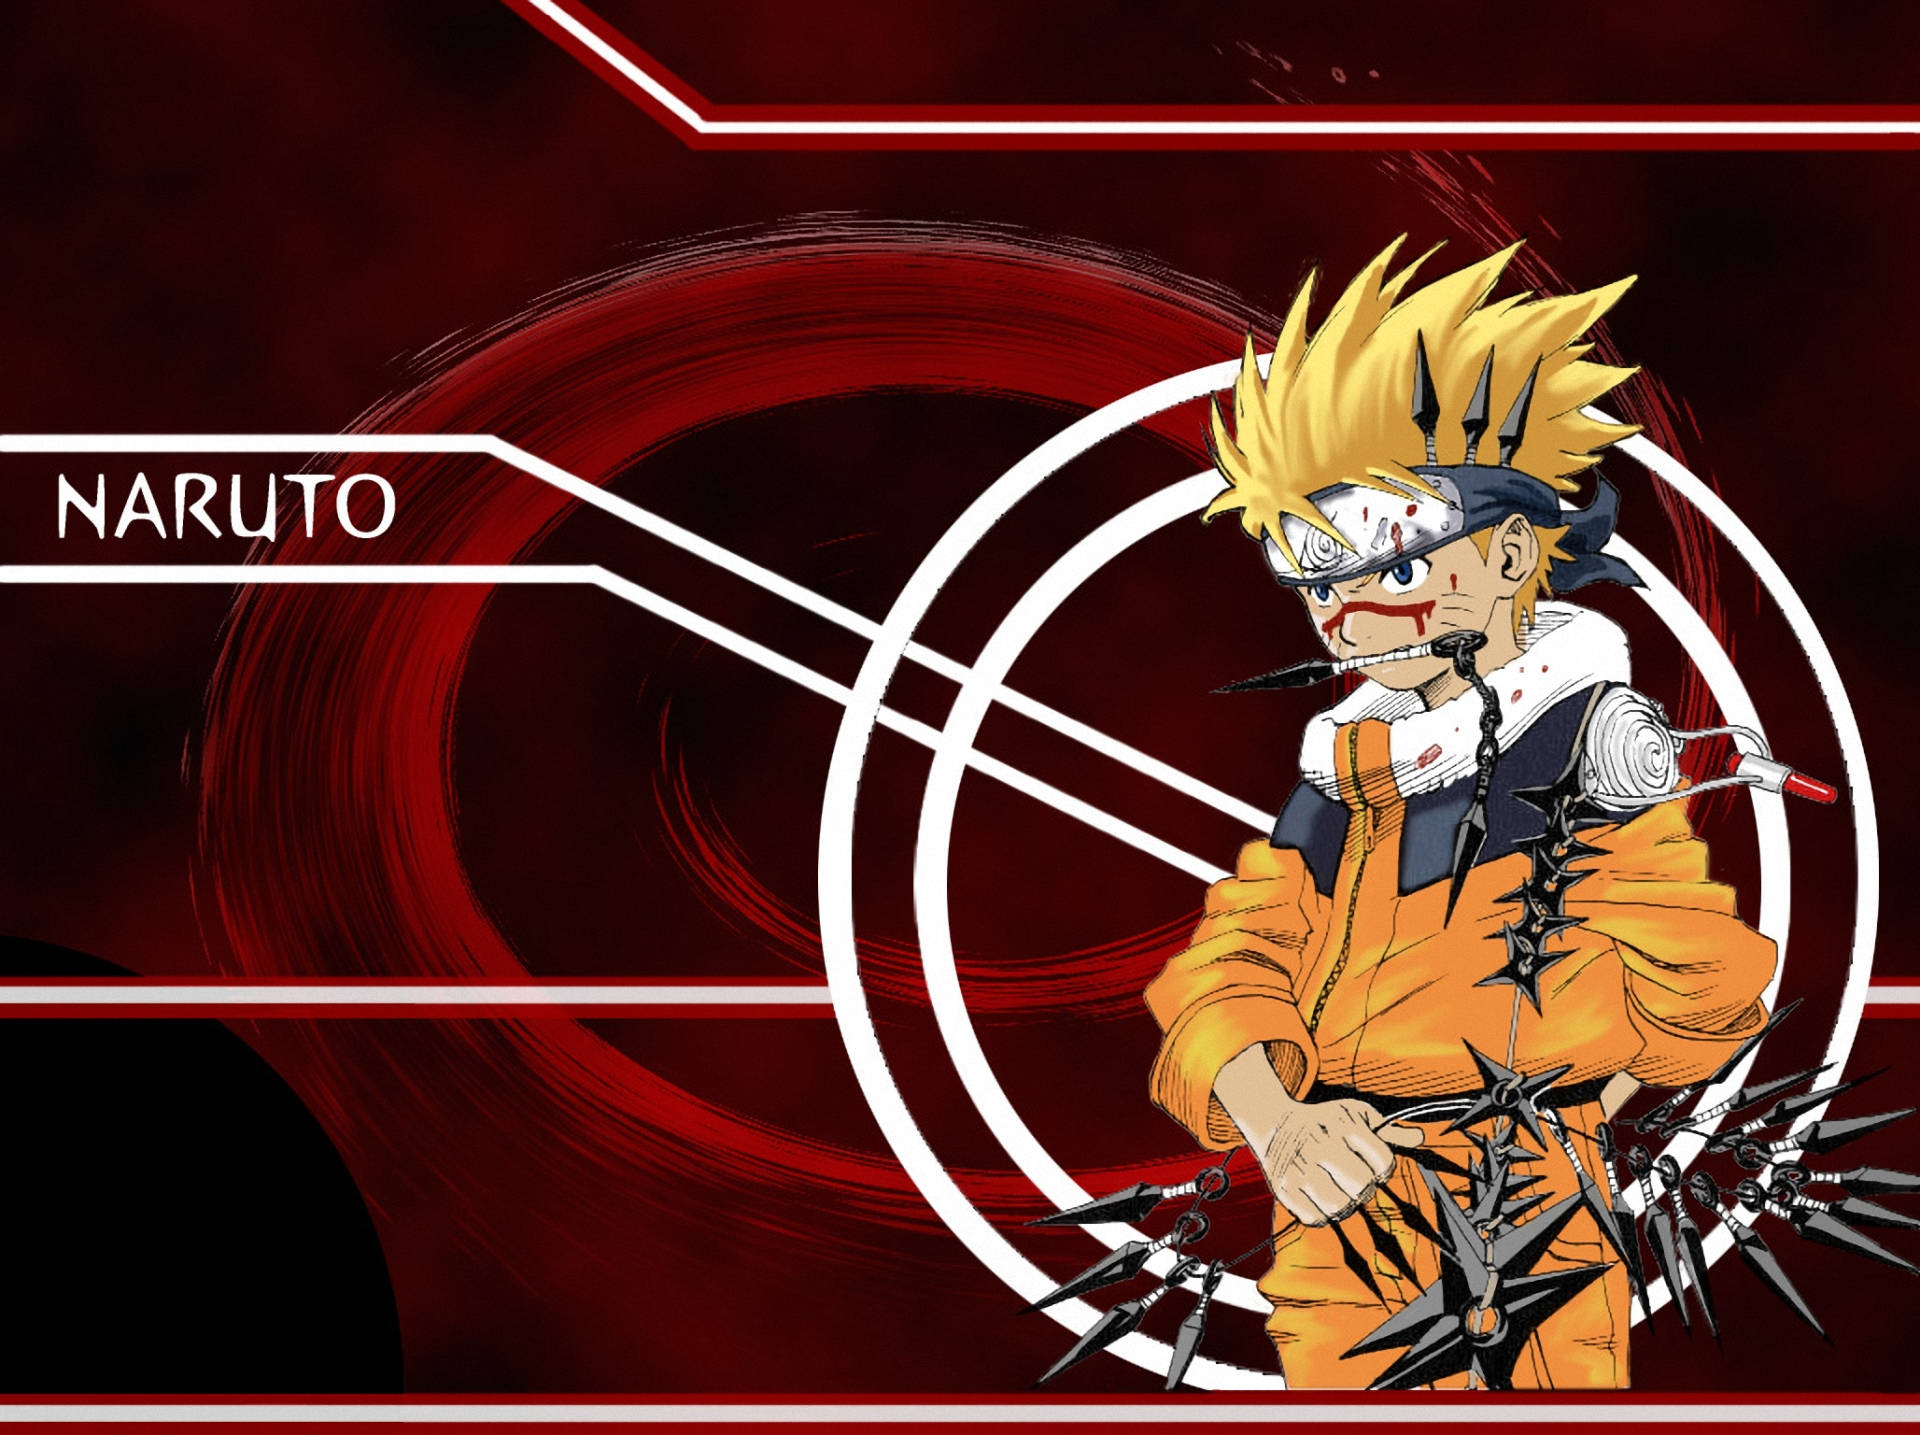 Moving Naruto Background Wallpaper